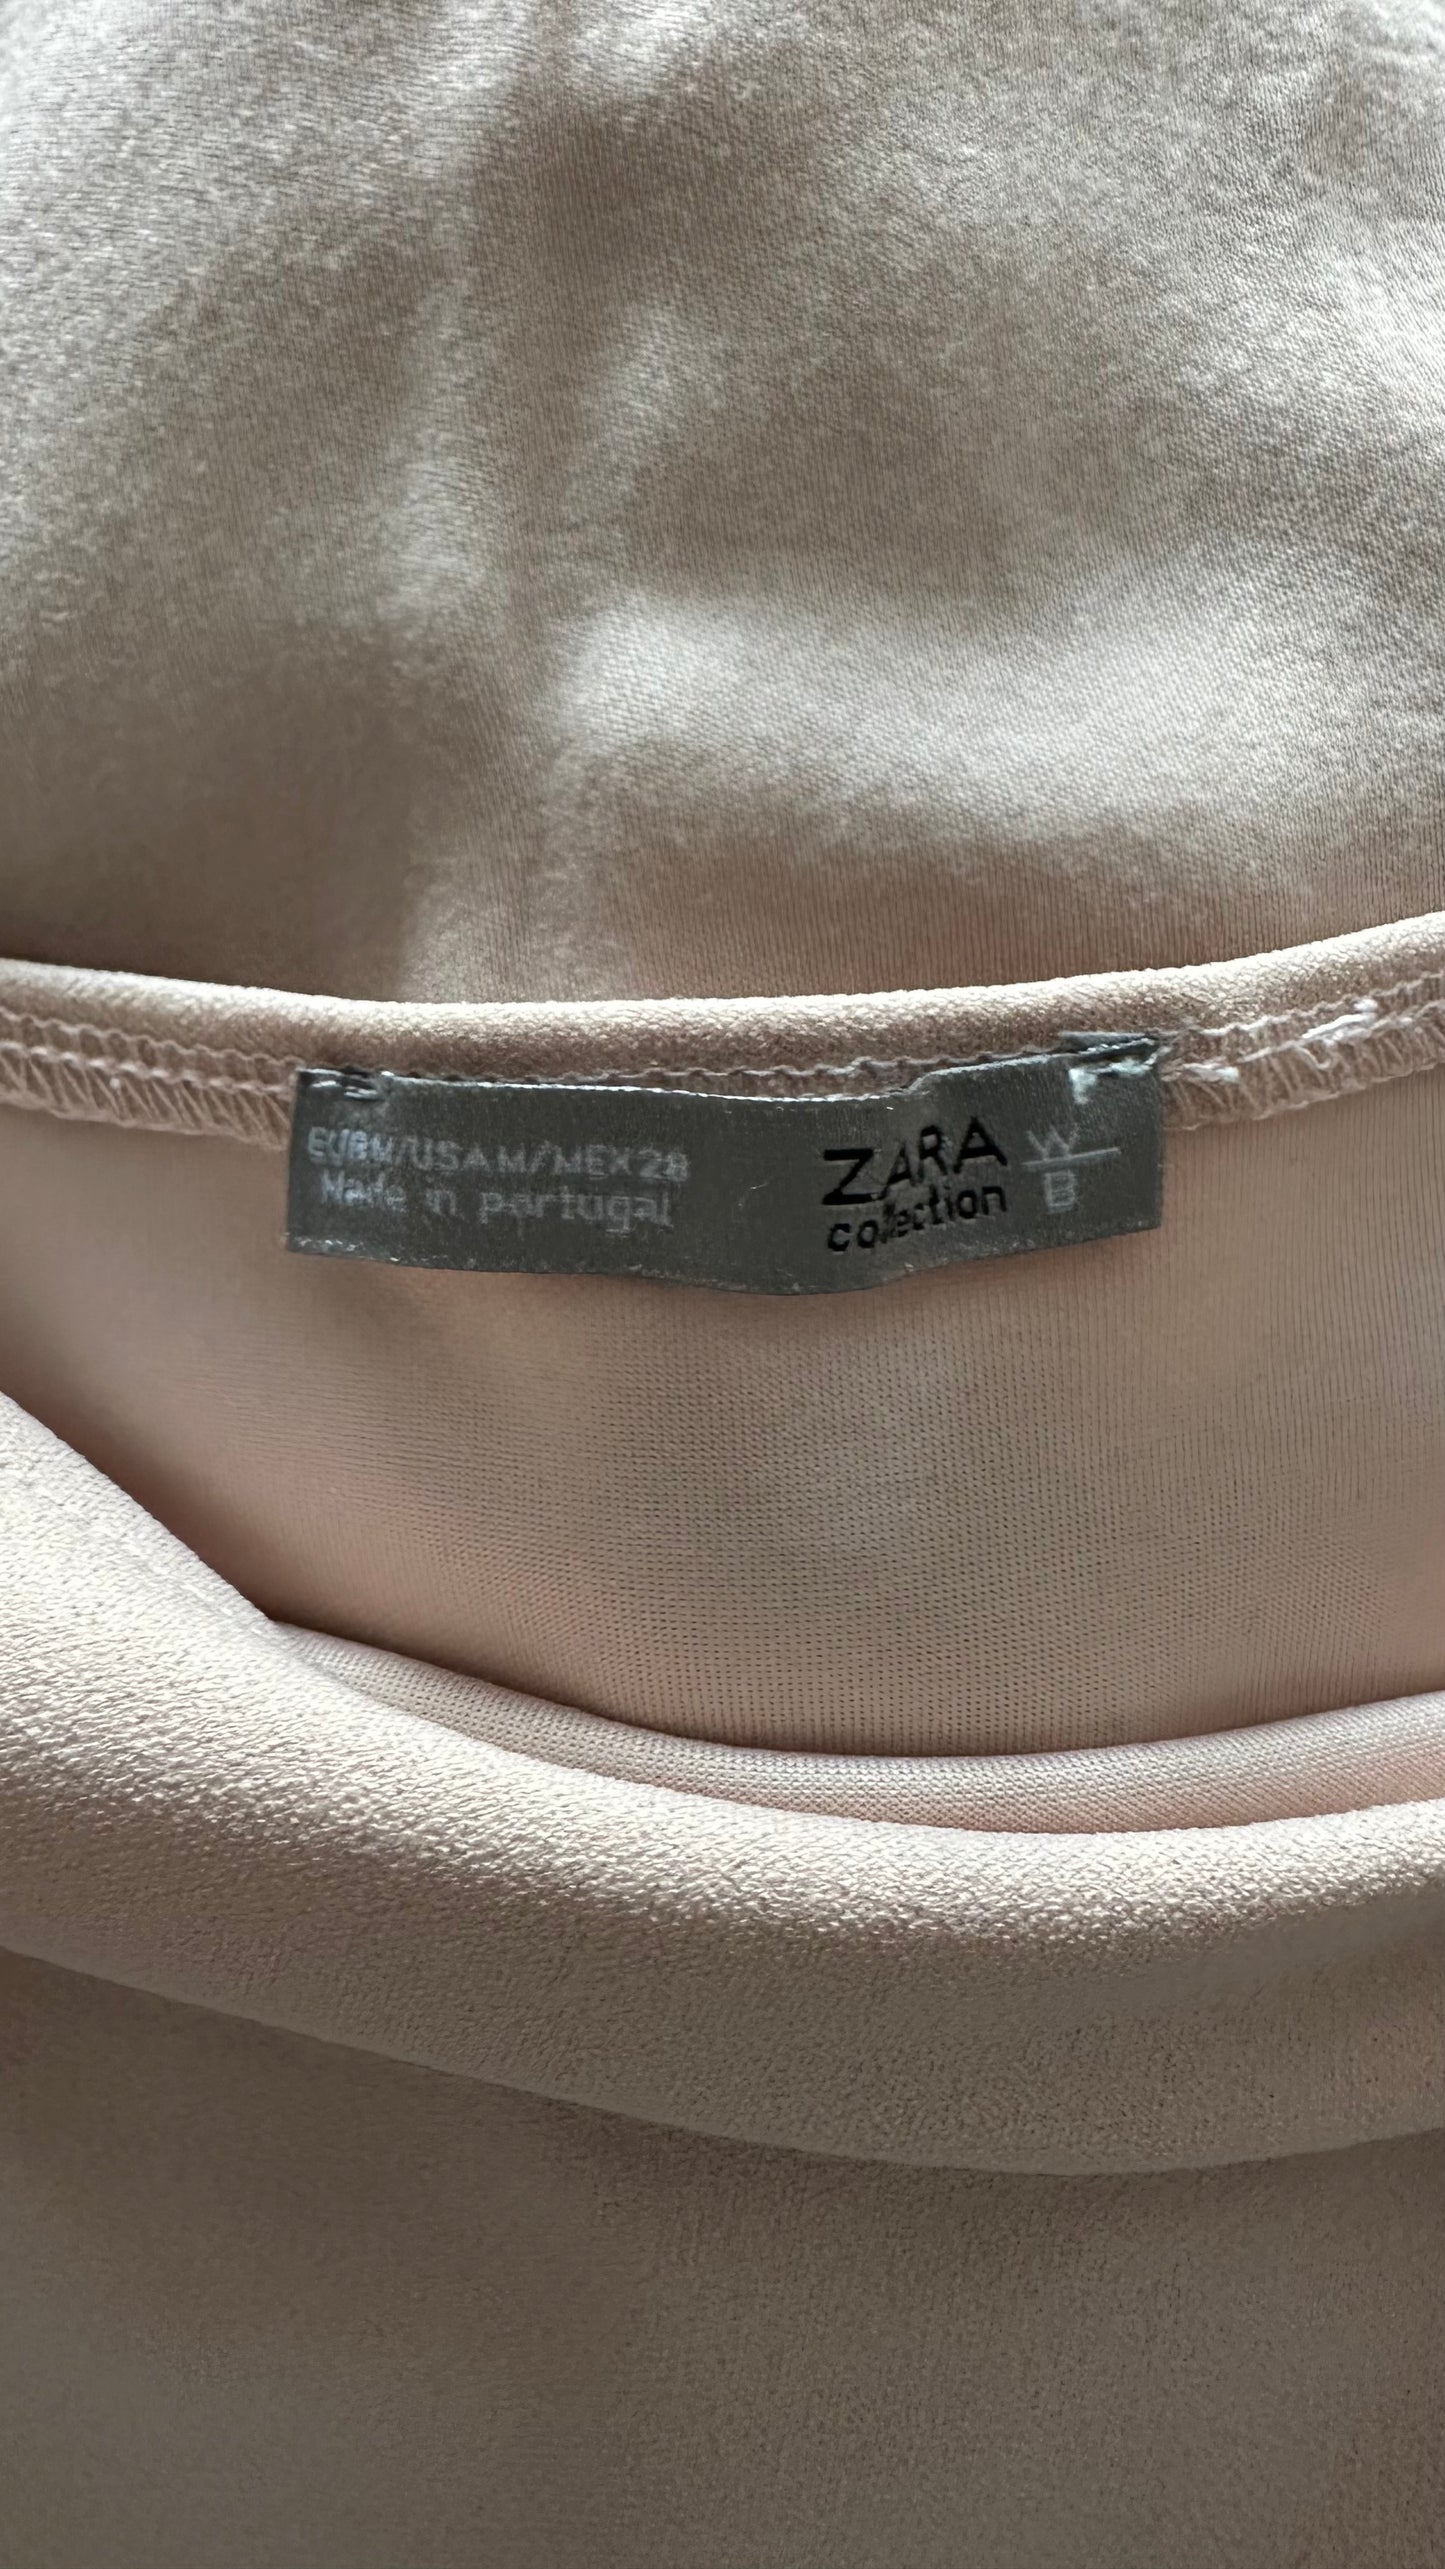 Zara rose beige jumpsuit Playsuit trousersuit medium UK 10 vgc neutral